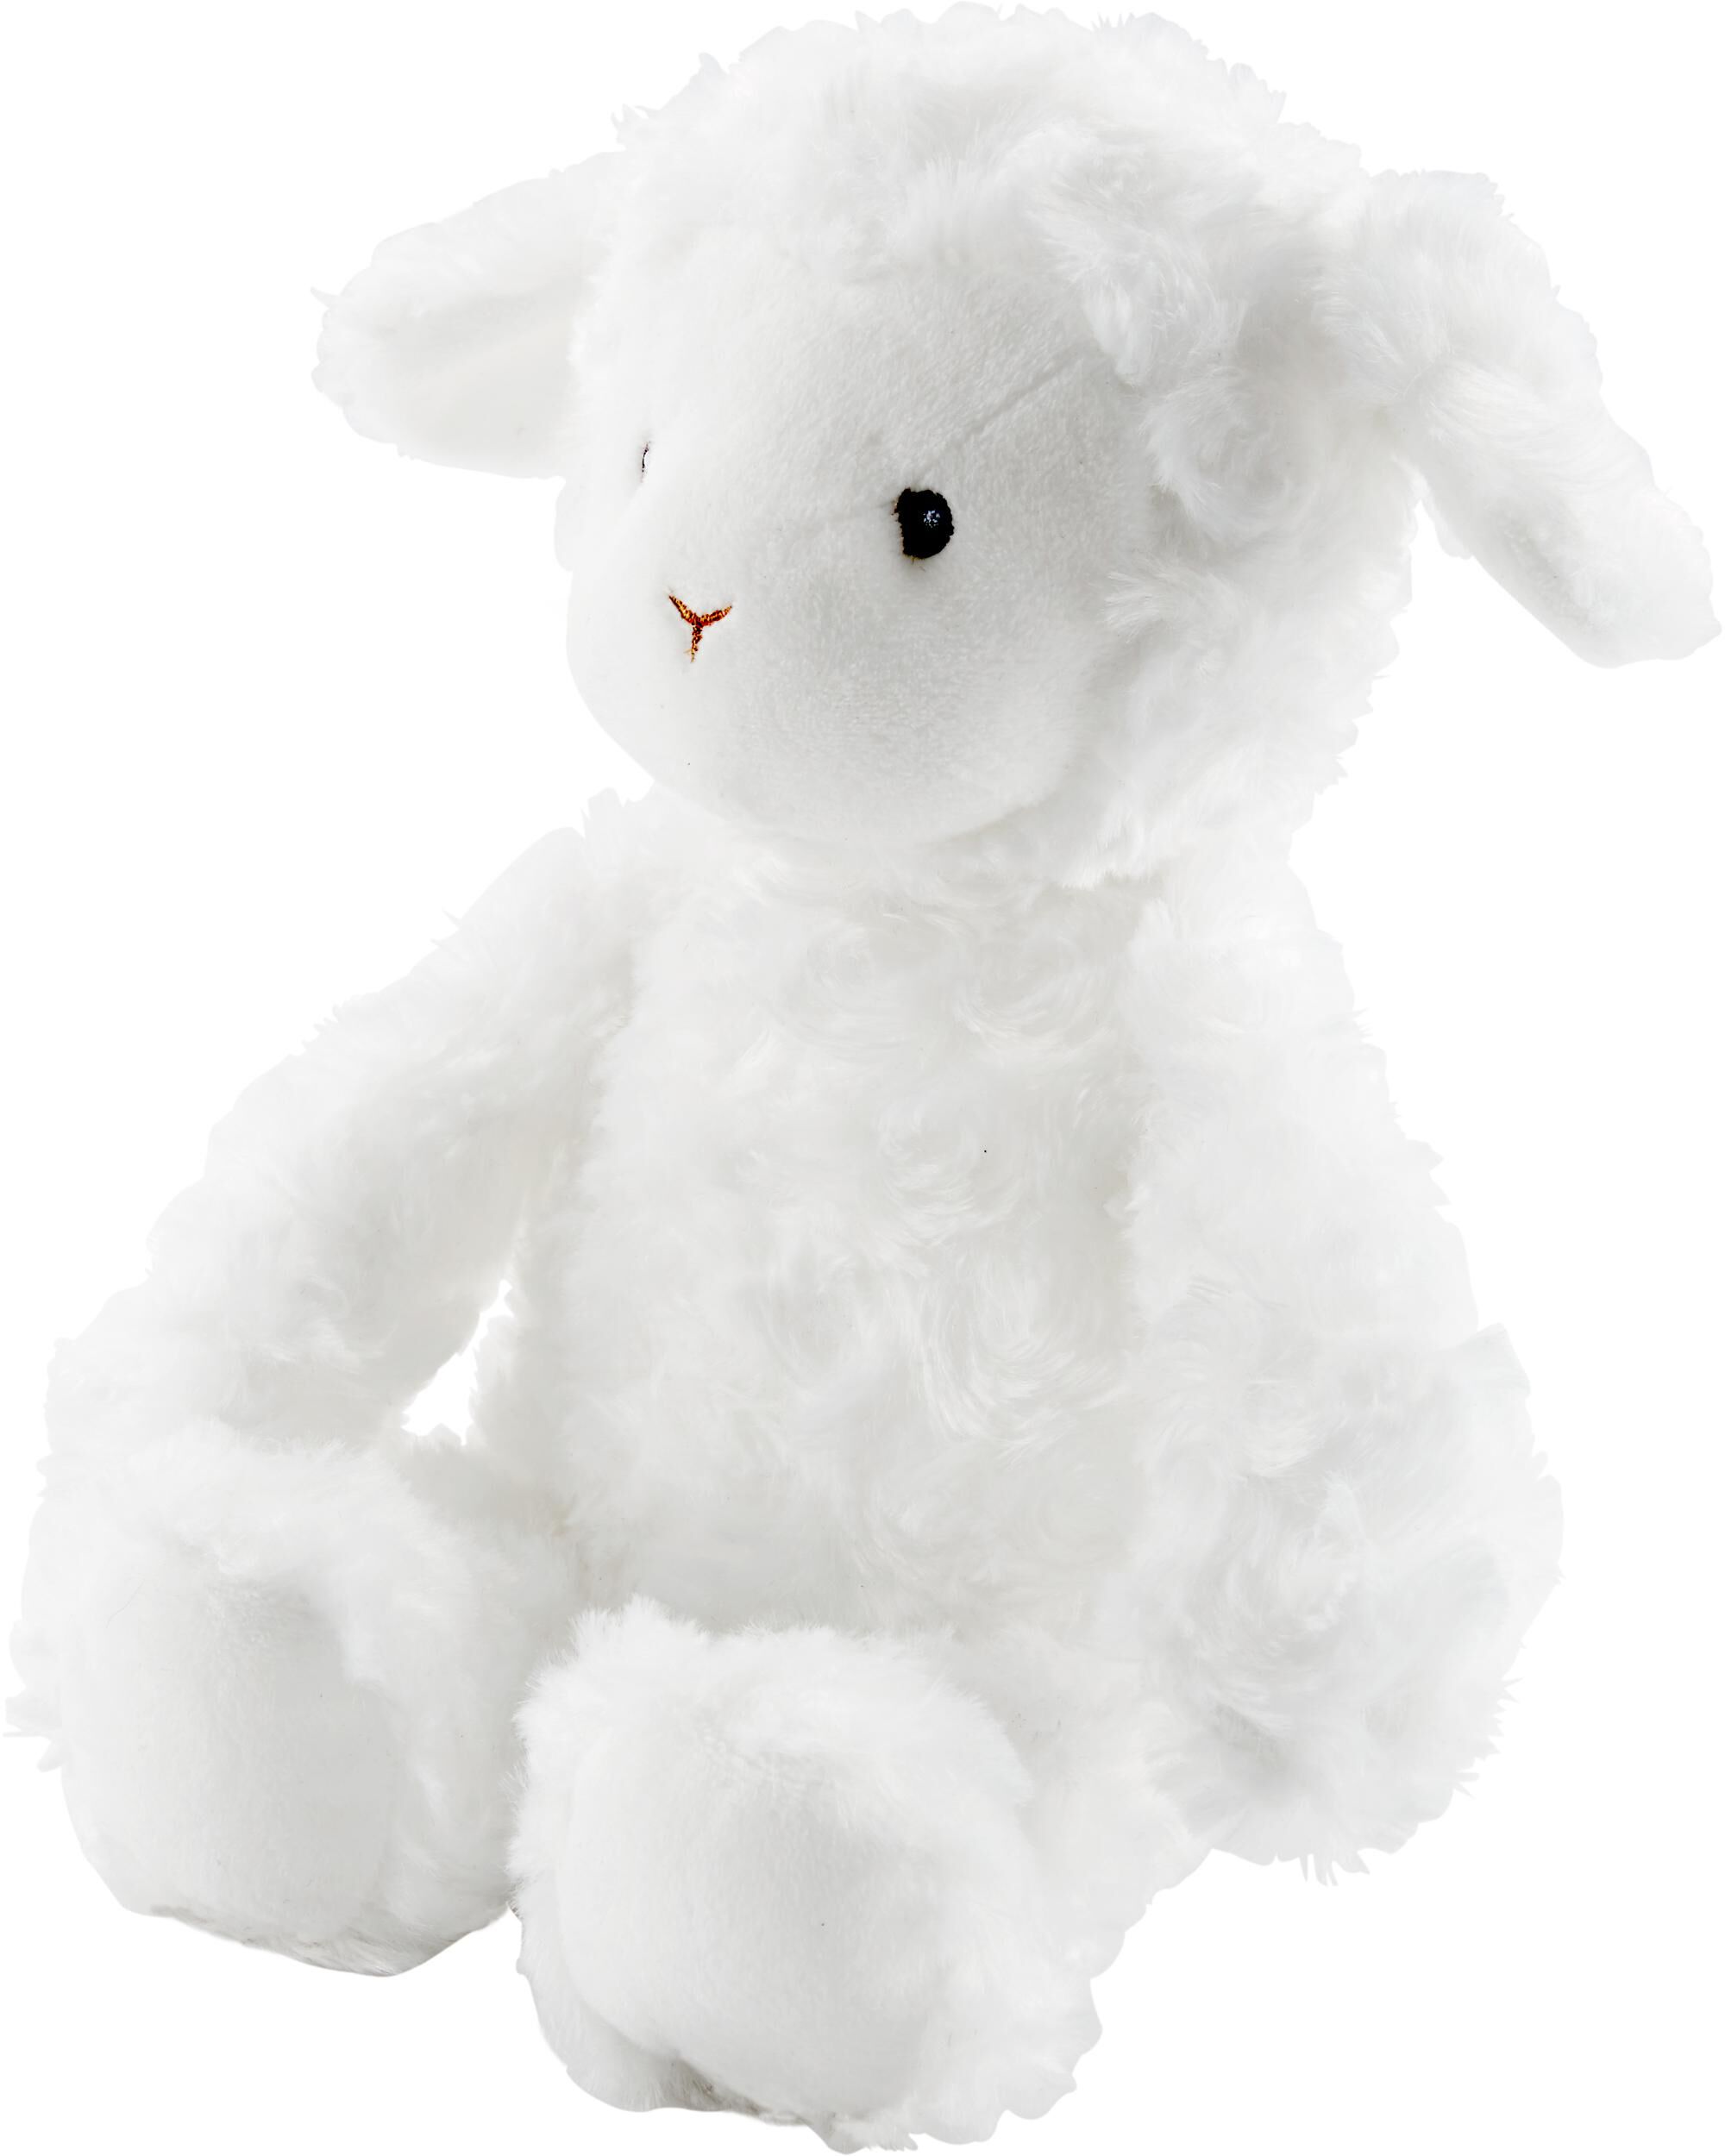 baby lamb teddy